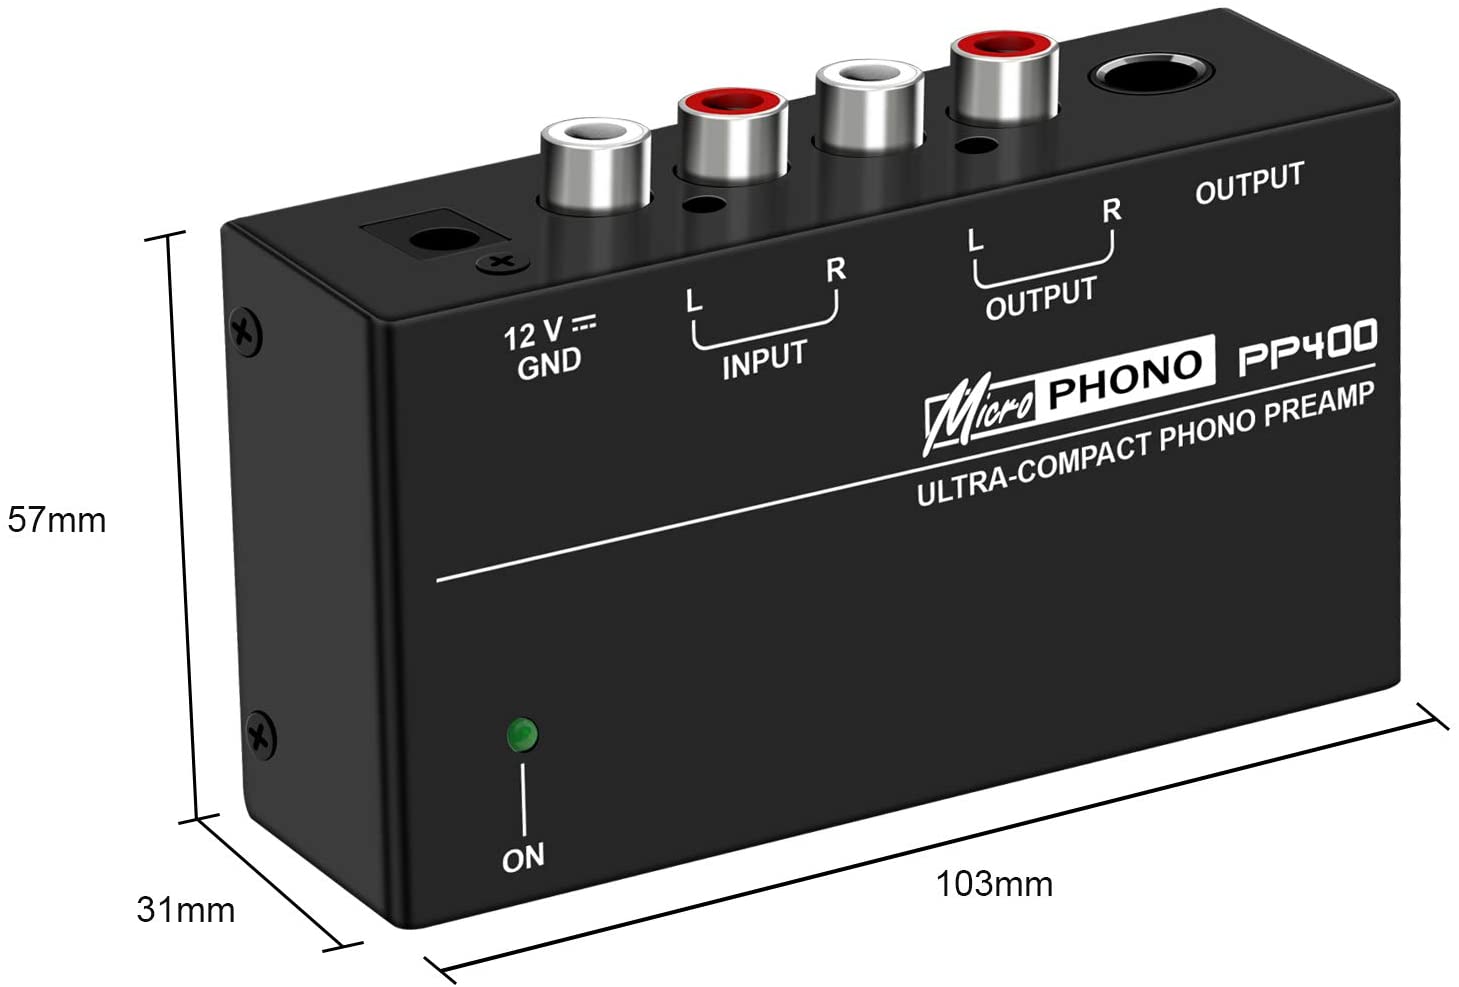 Rybozen Phono Turntable Preamp - Mini Electronic Audio Stereo Phonogra